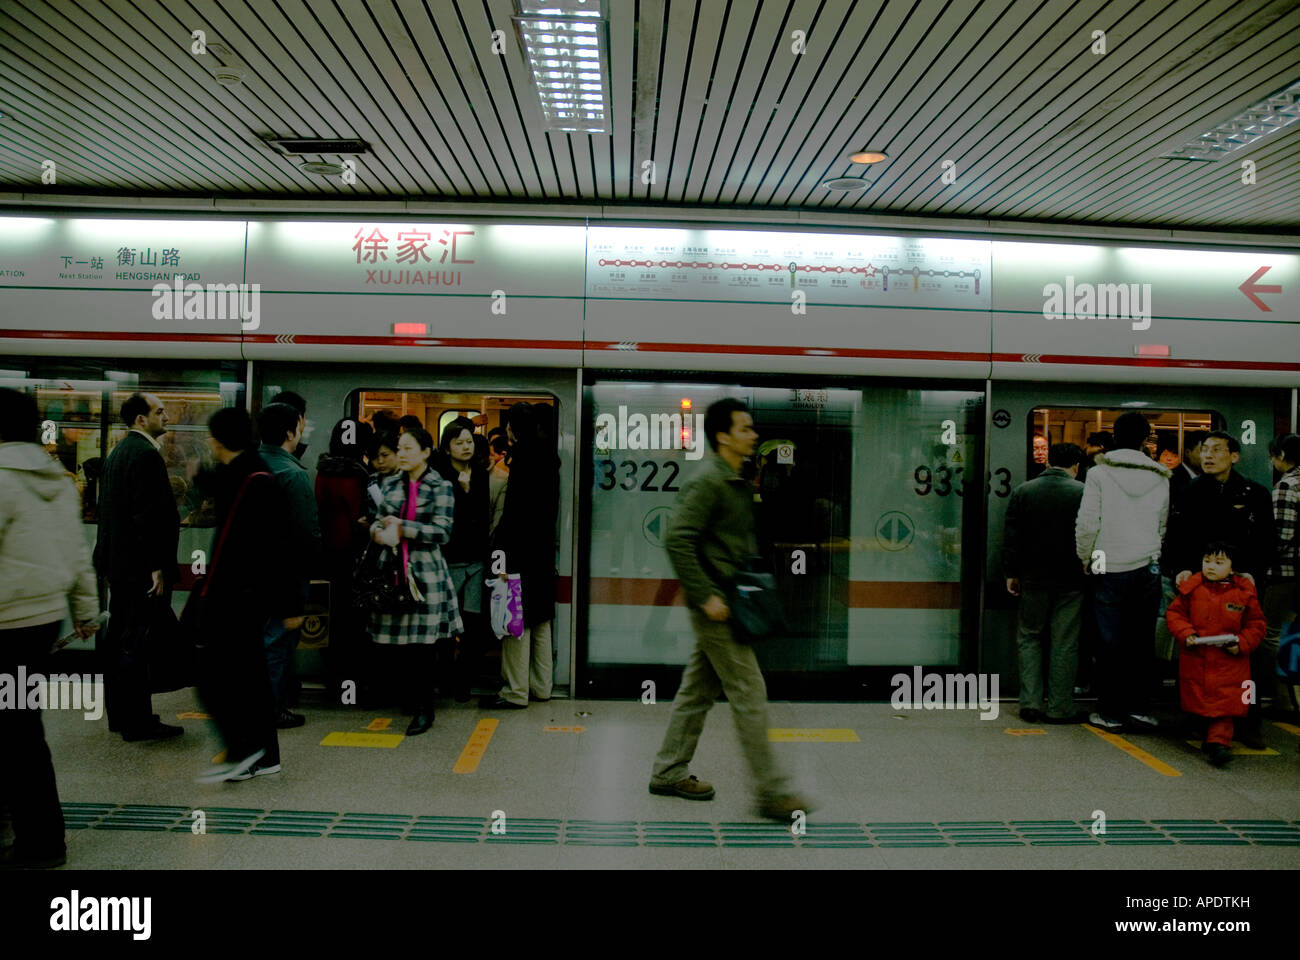 Subway platform on Shanghai metro Stock Photo